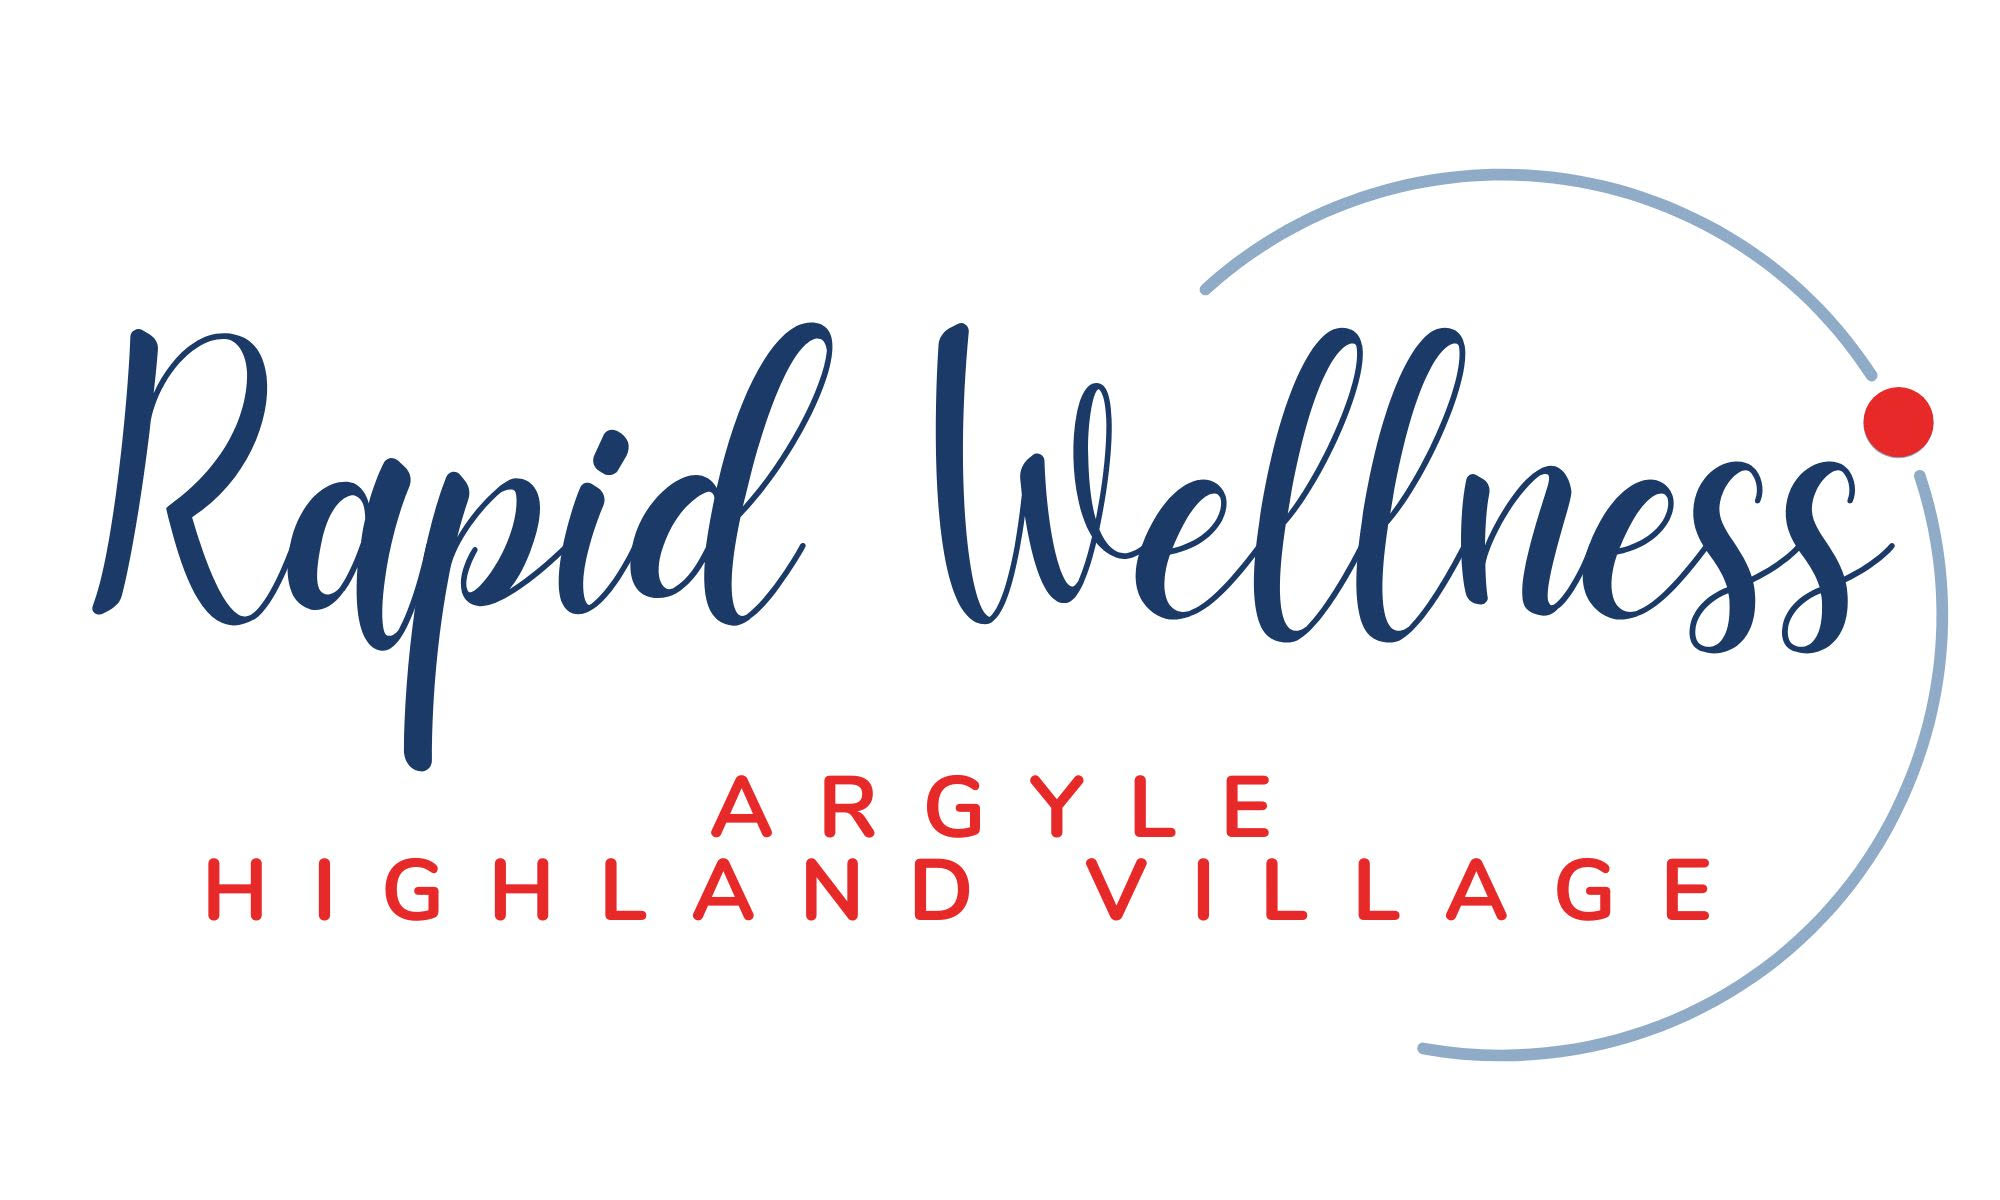 Rapid - Wellness Highland Village Logo